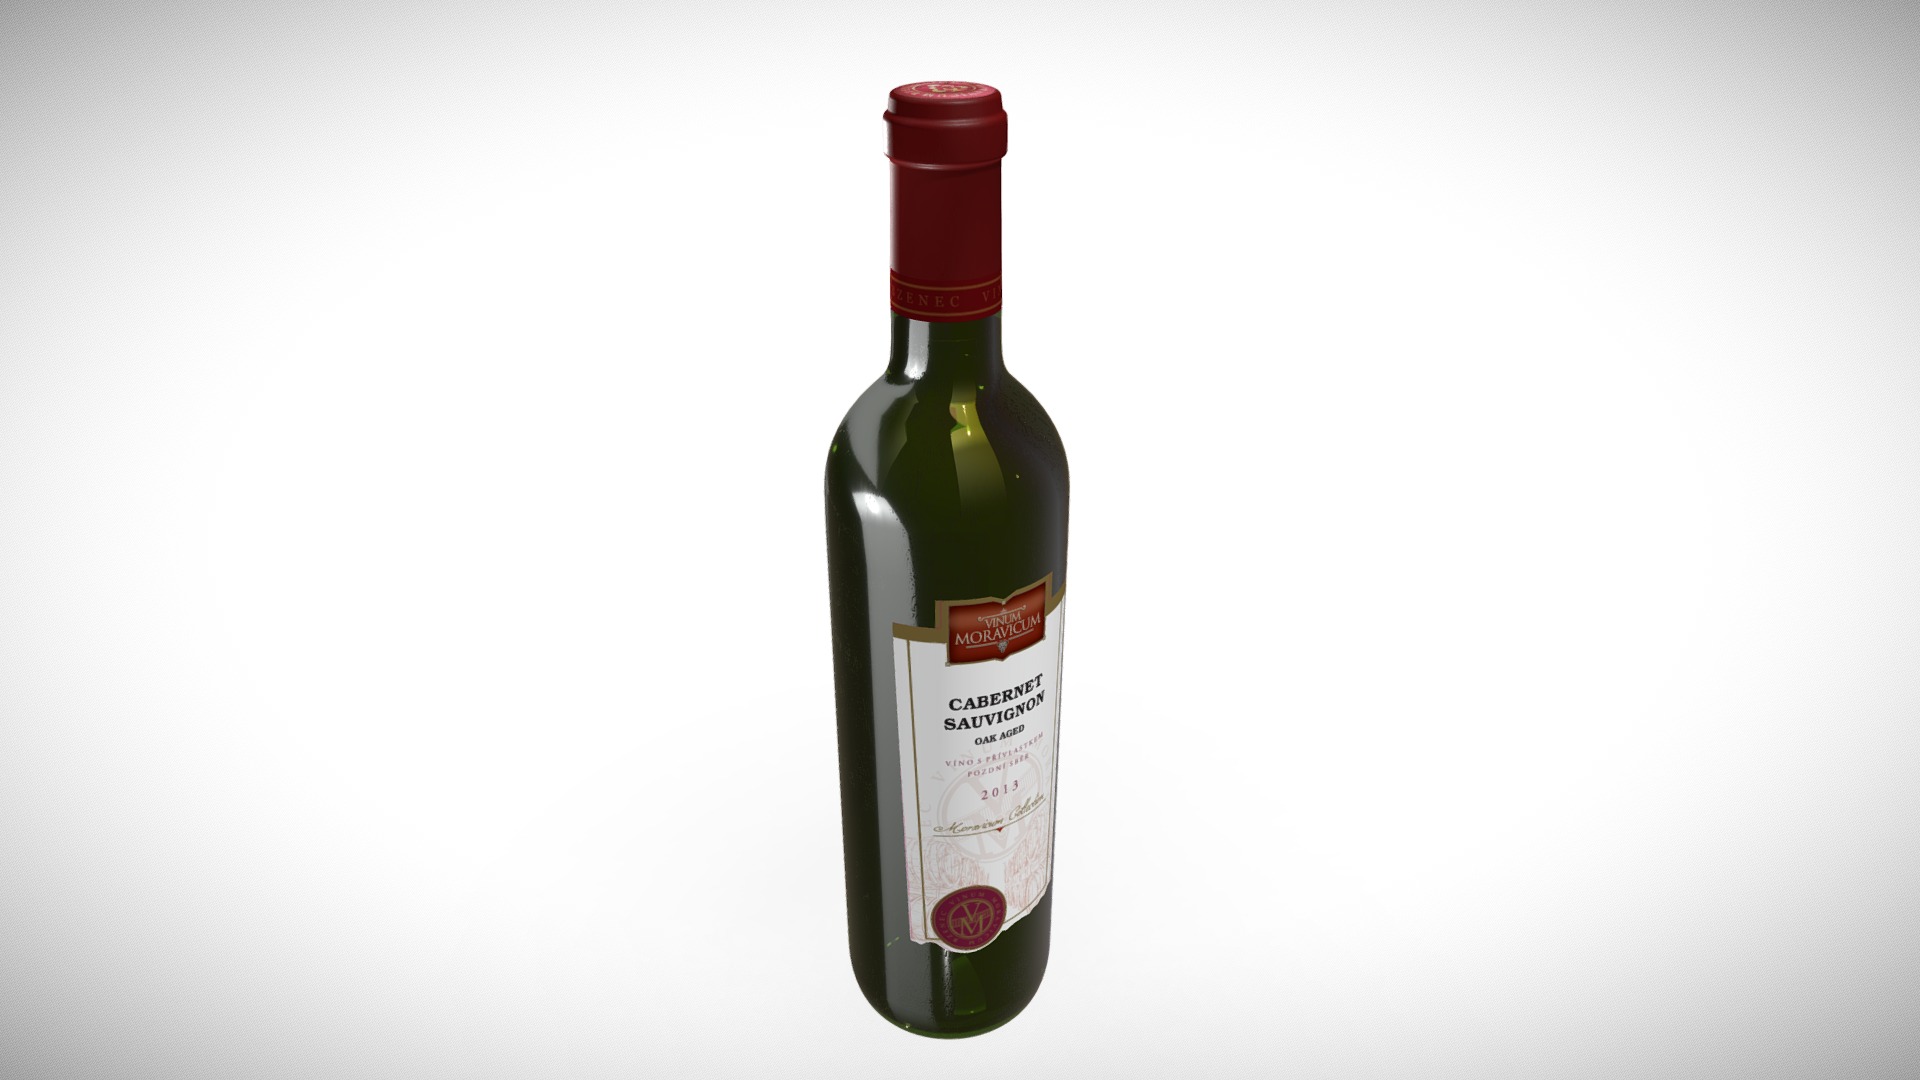 3D model Bottle of Wine Cabernet Sauvignon Oak aged - This is a 3D model of the Bottle of Wine Cabernet Sauvignon Oak aged. The 3D model is about a bottle of wine.